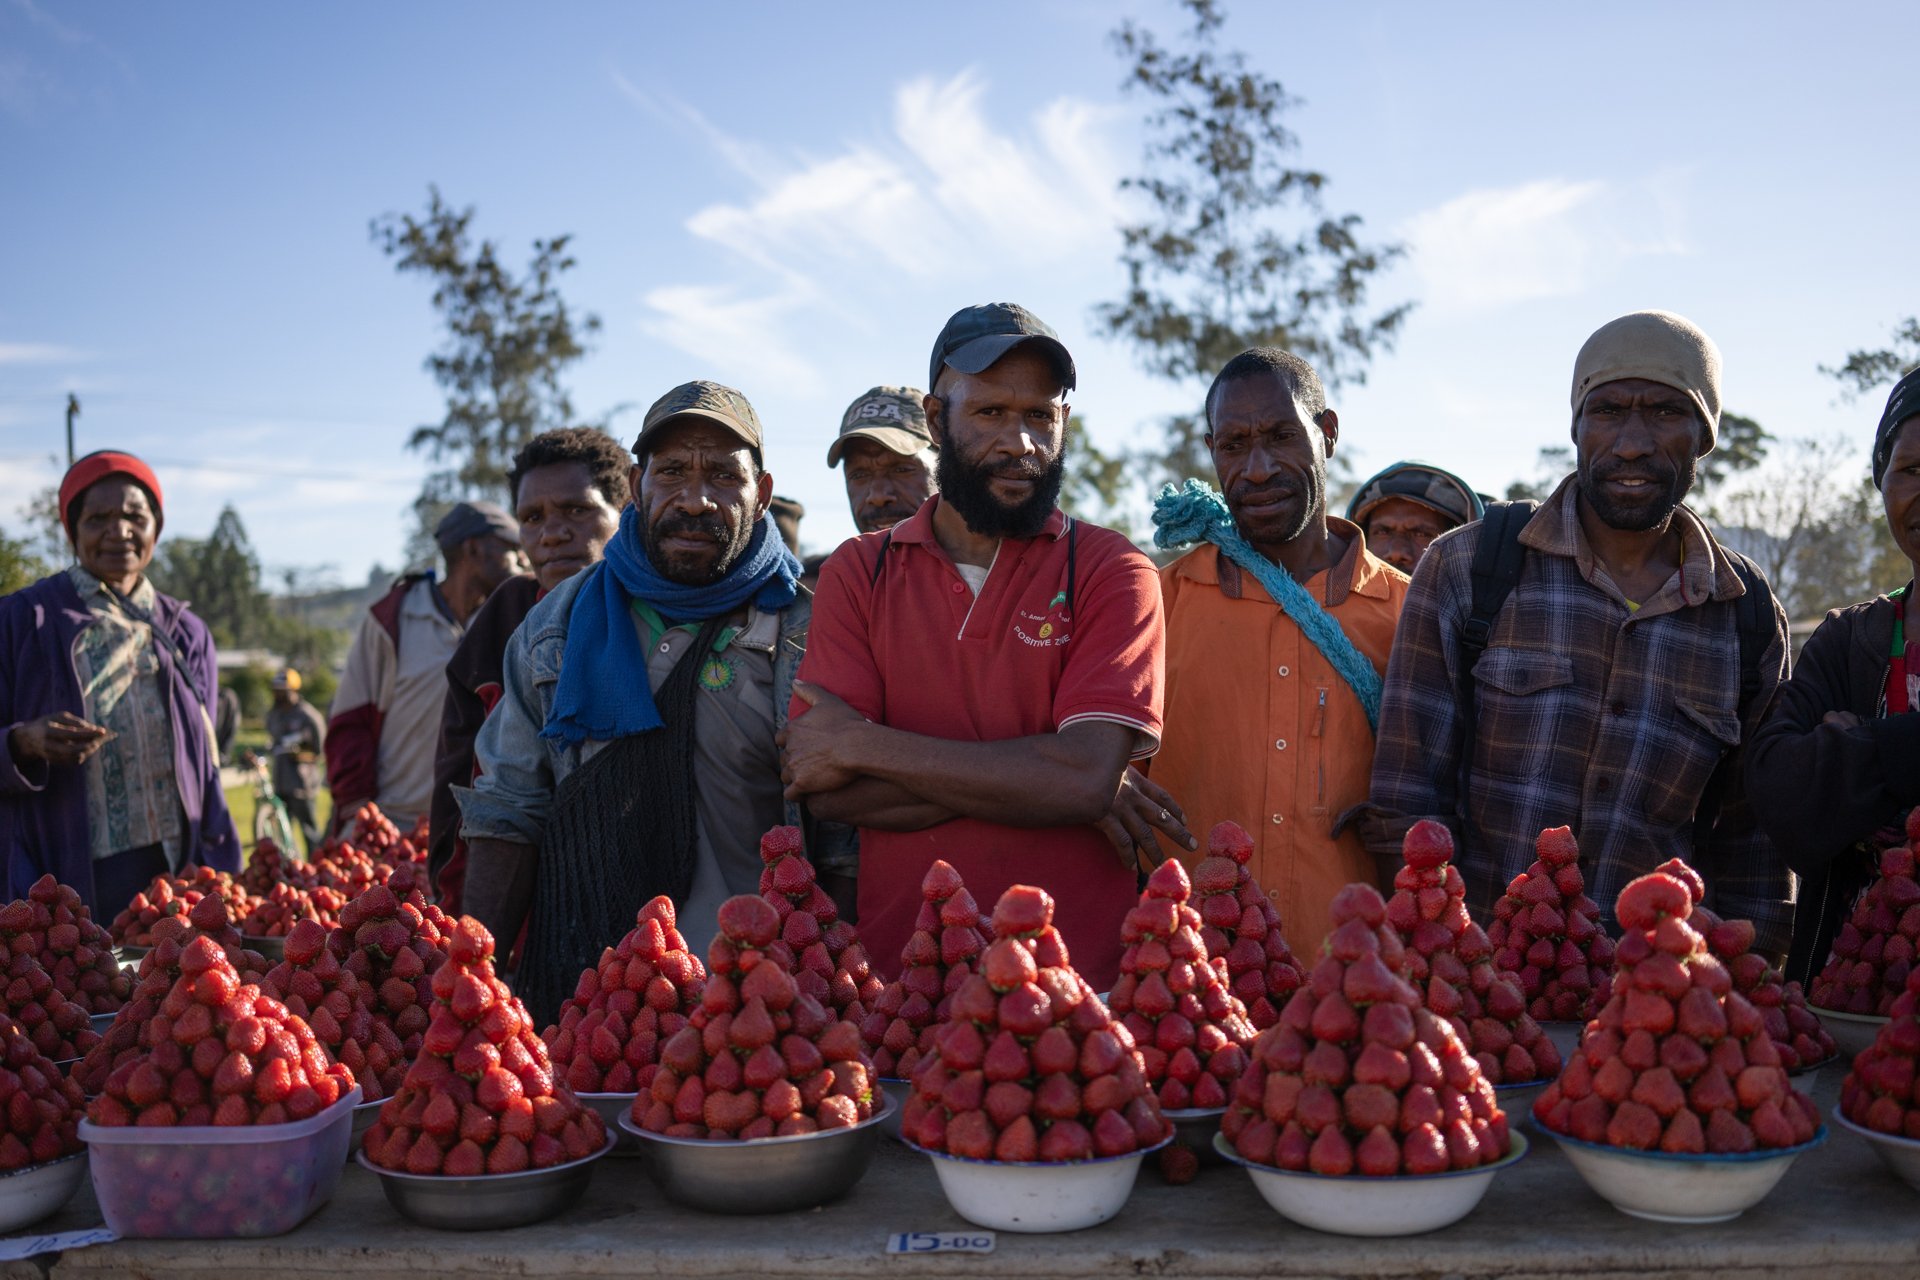  Villagers selling strawberries in Goroka, Papua New Guinea. August 2019.  